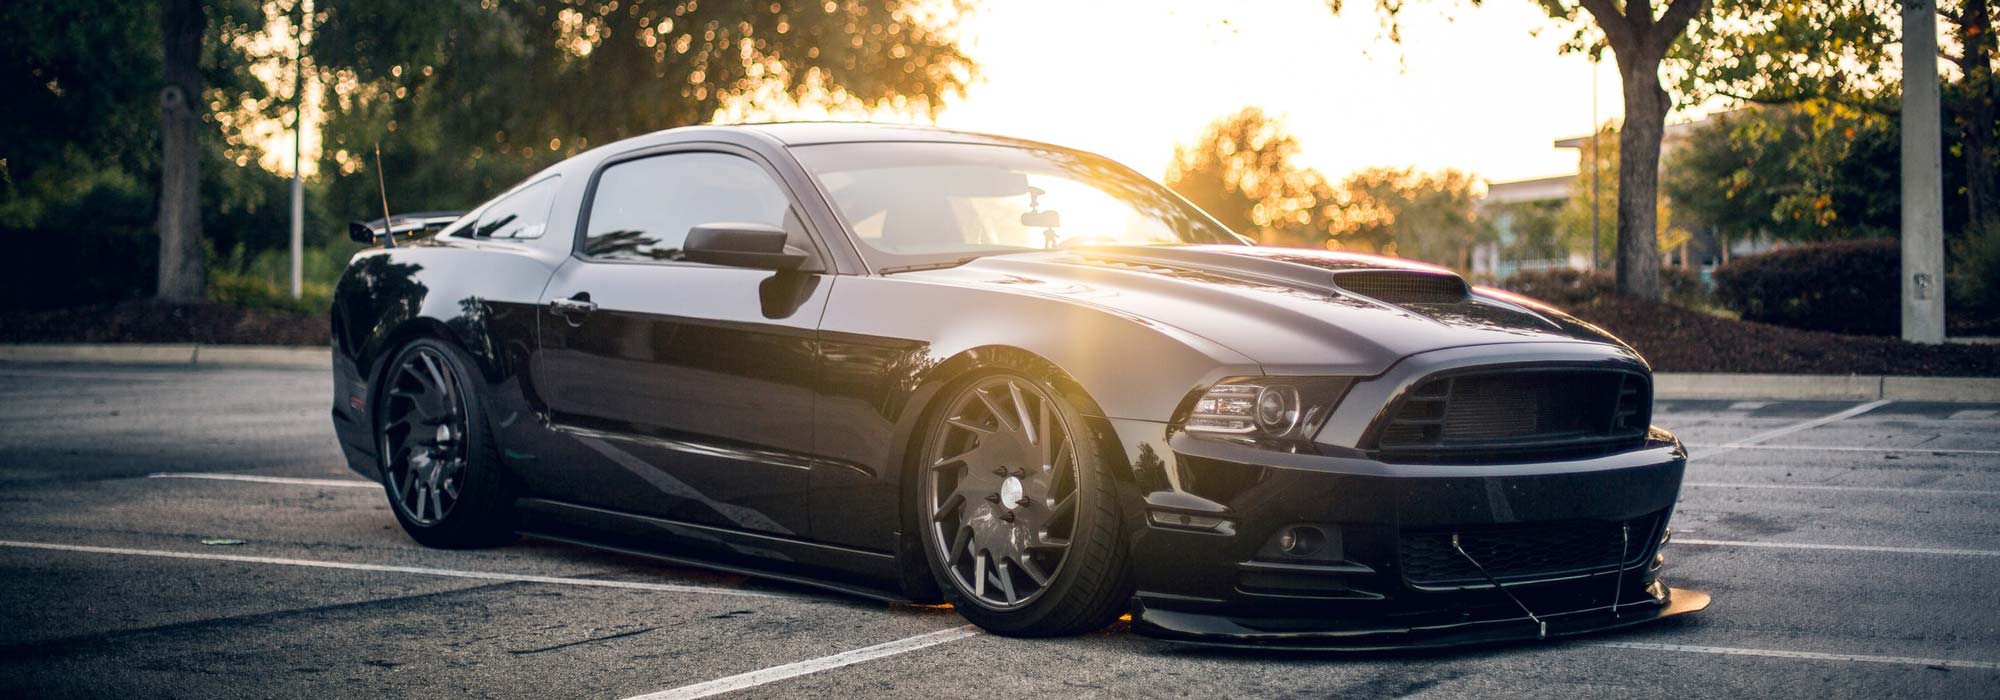 Grey Mustang in parking lot